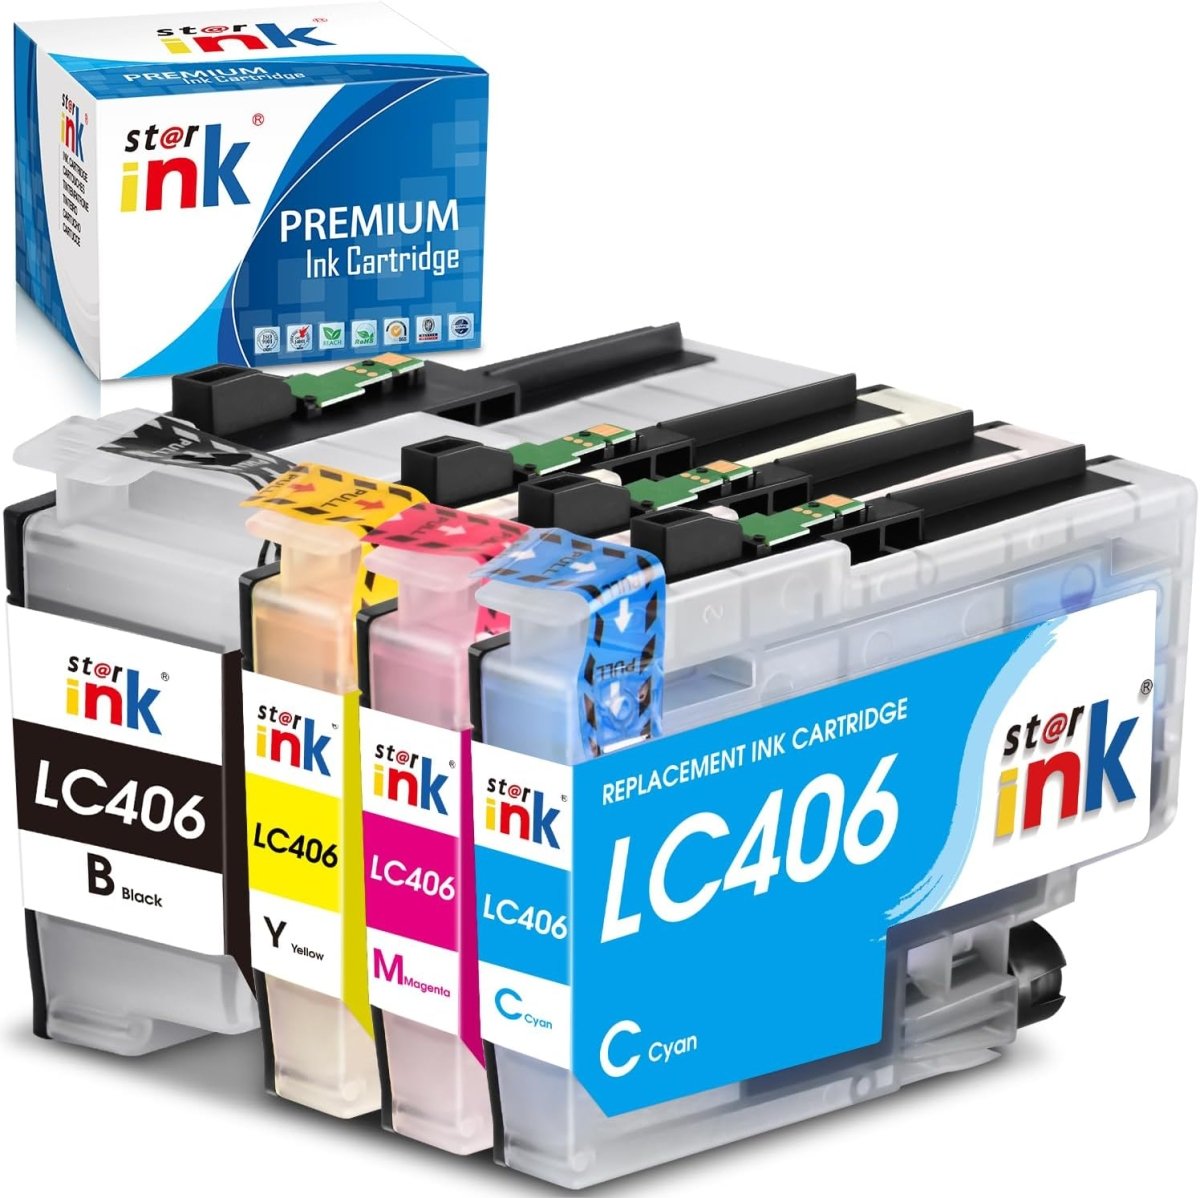 Compatible Brother LC406 Ink Cartridges Set, 4-Pack - Linford Office:Printer Ink & Toner Cartridge